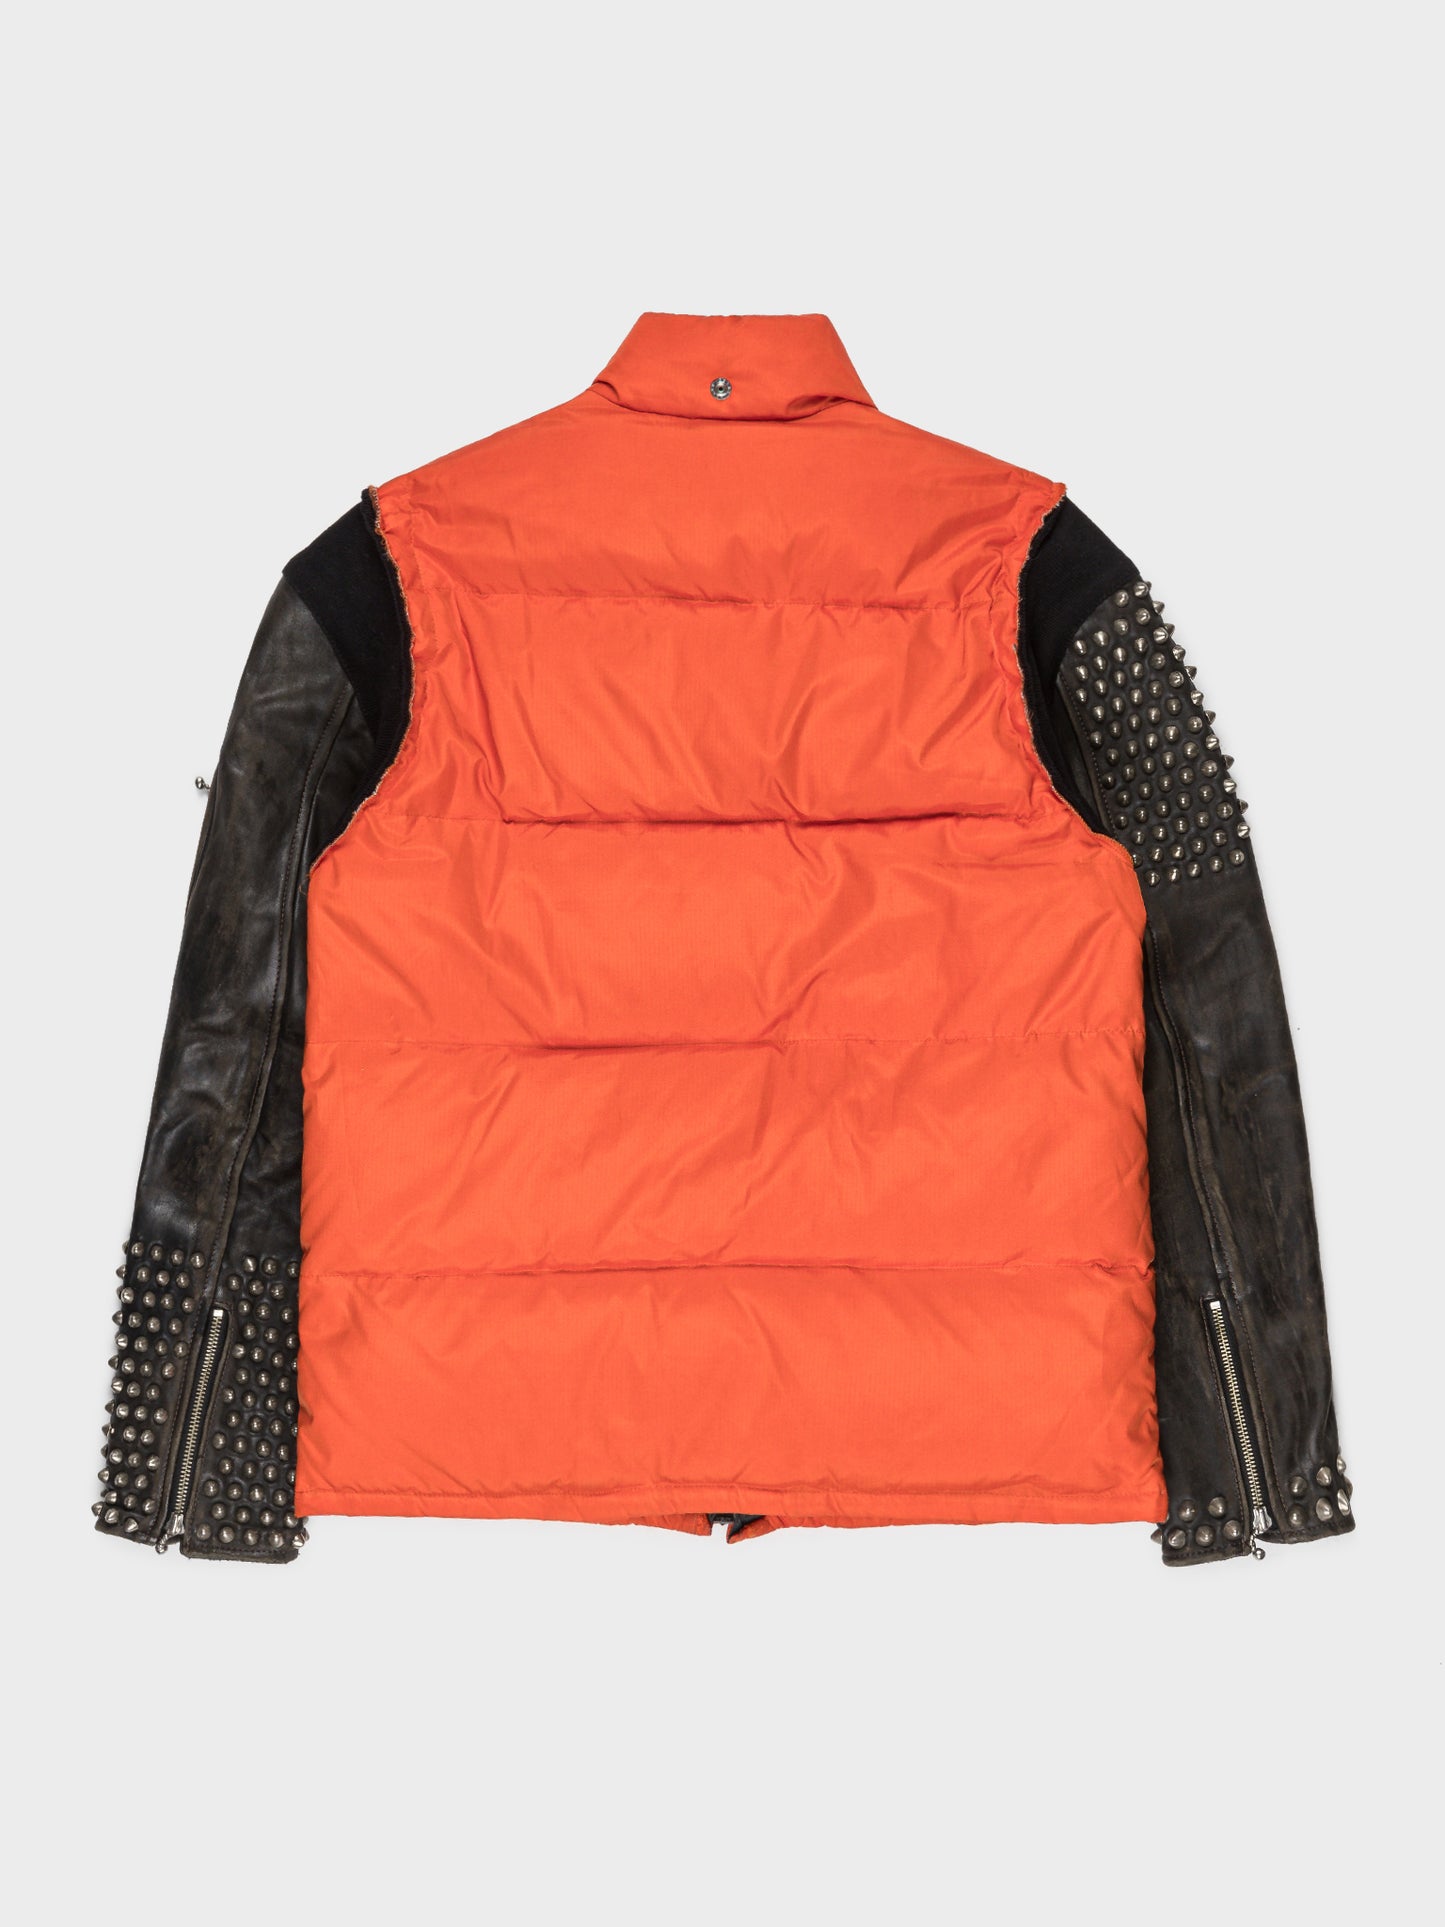 Studded Leather/Puffer Hybrid Jacket